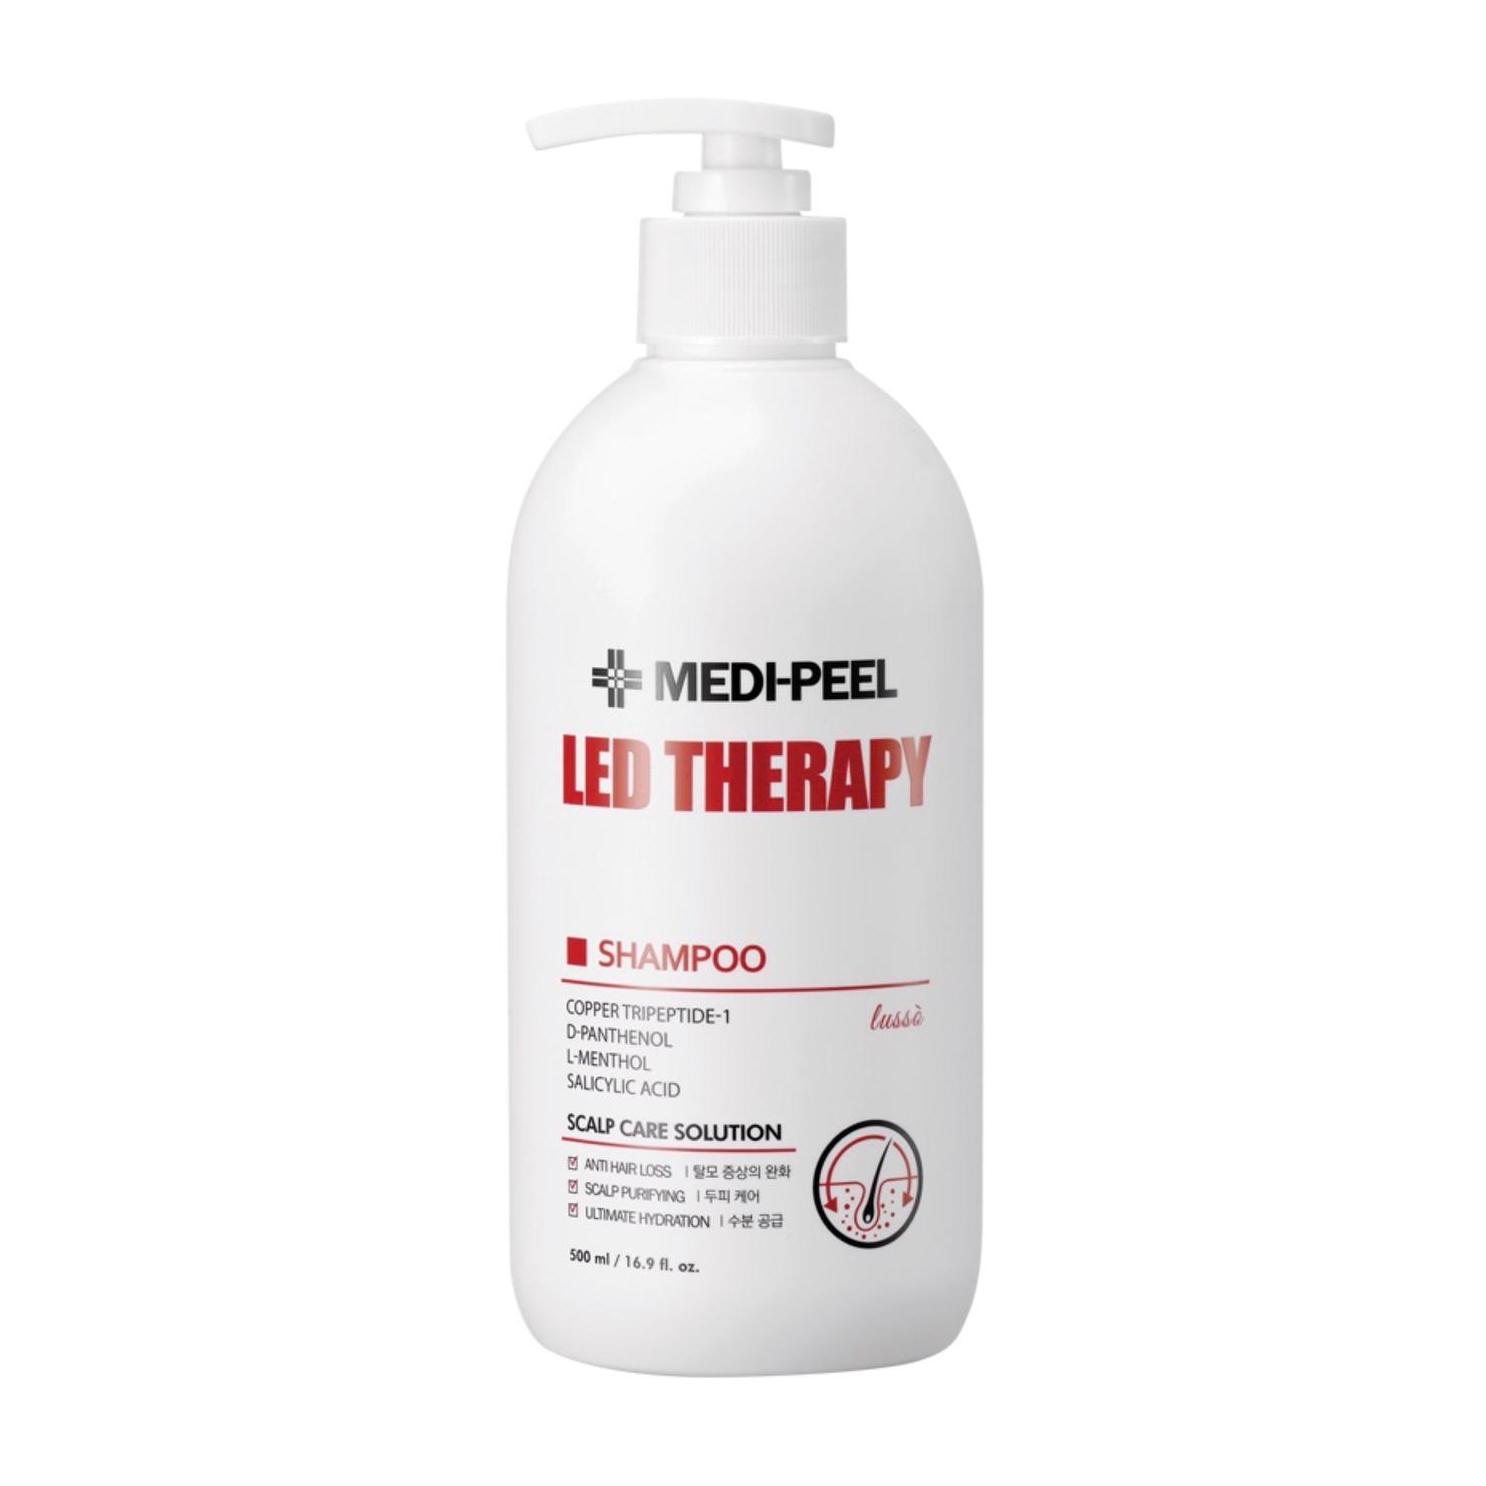 MEDI-PEEL Led Therapy Shampoo